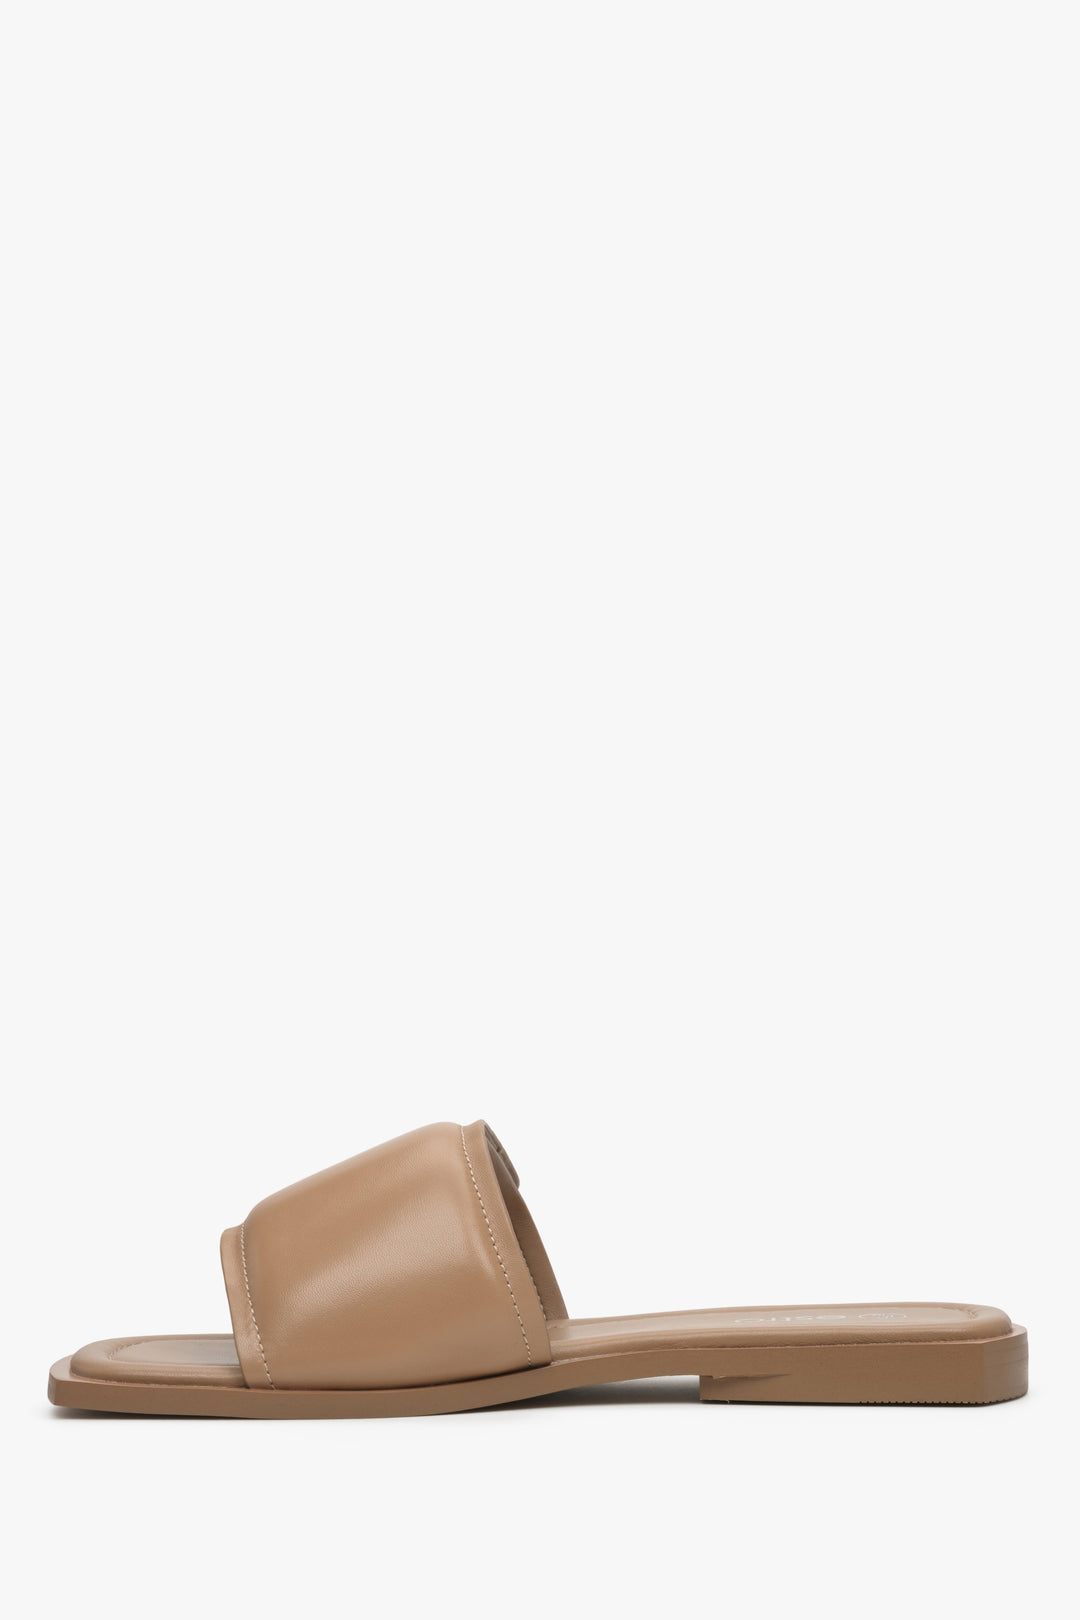 Brown leather flat slide sandals Estro - shoe profile.